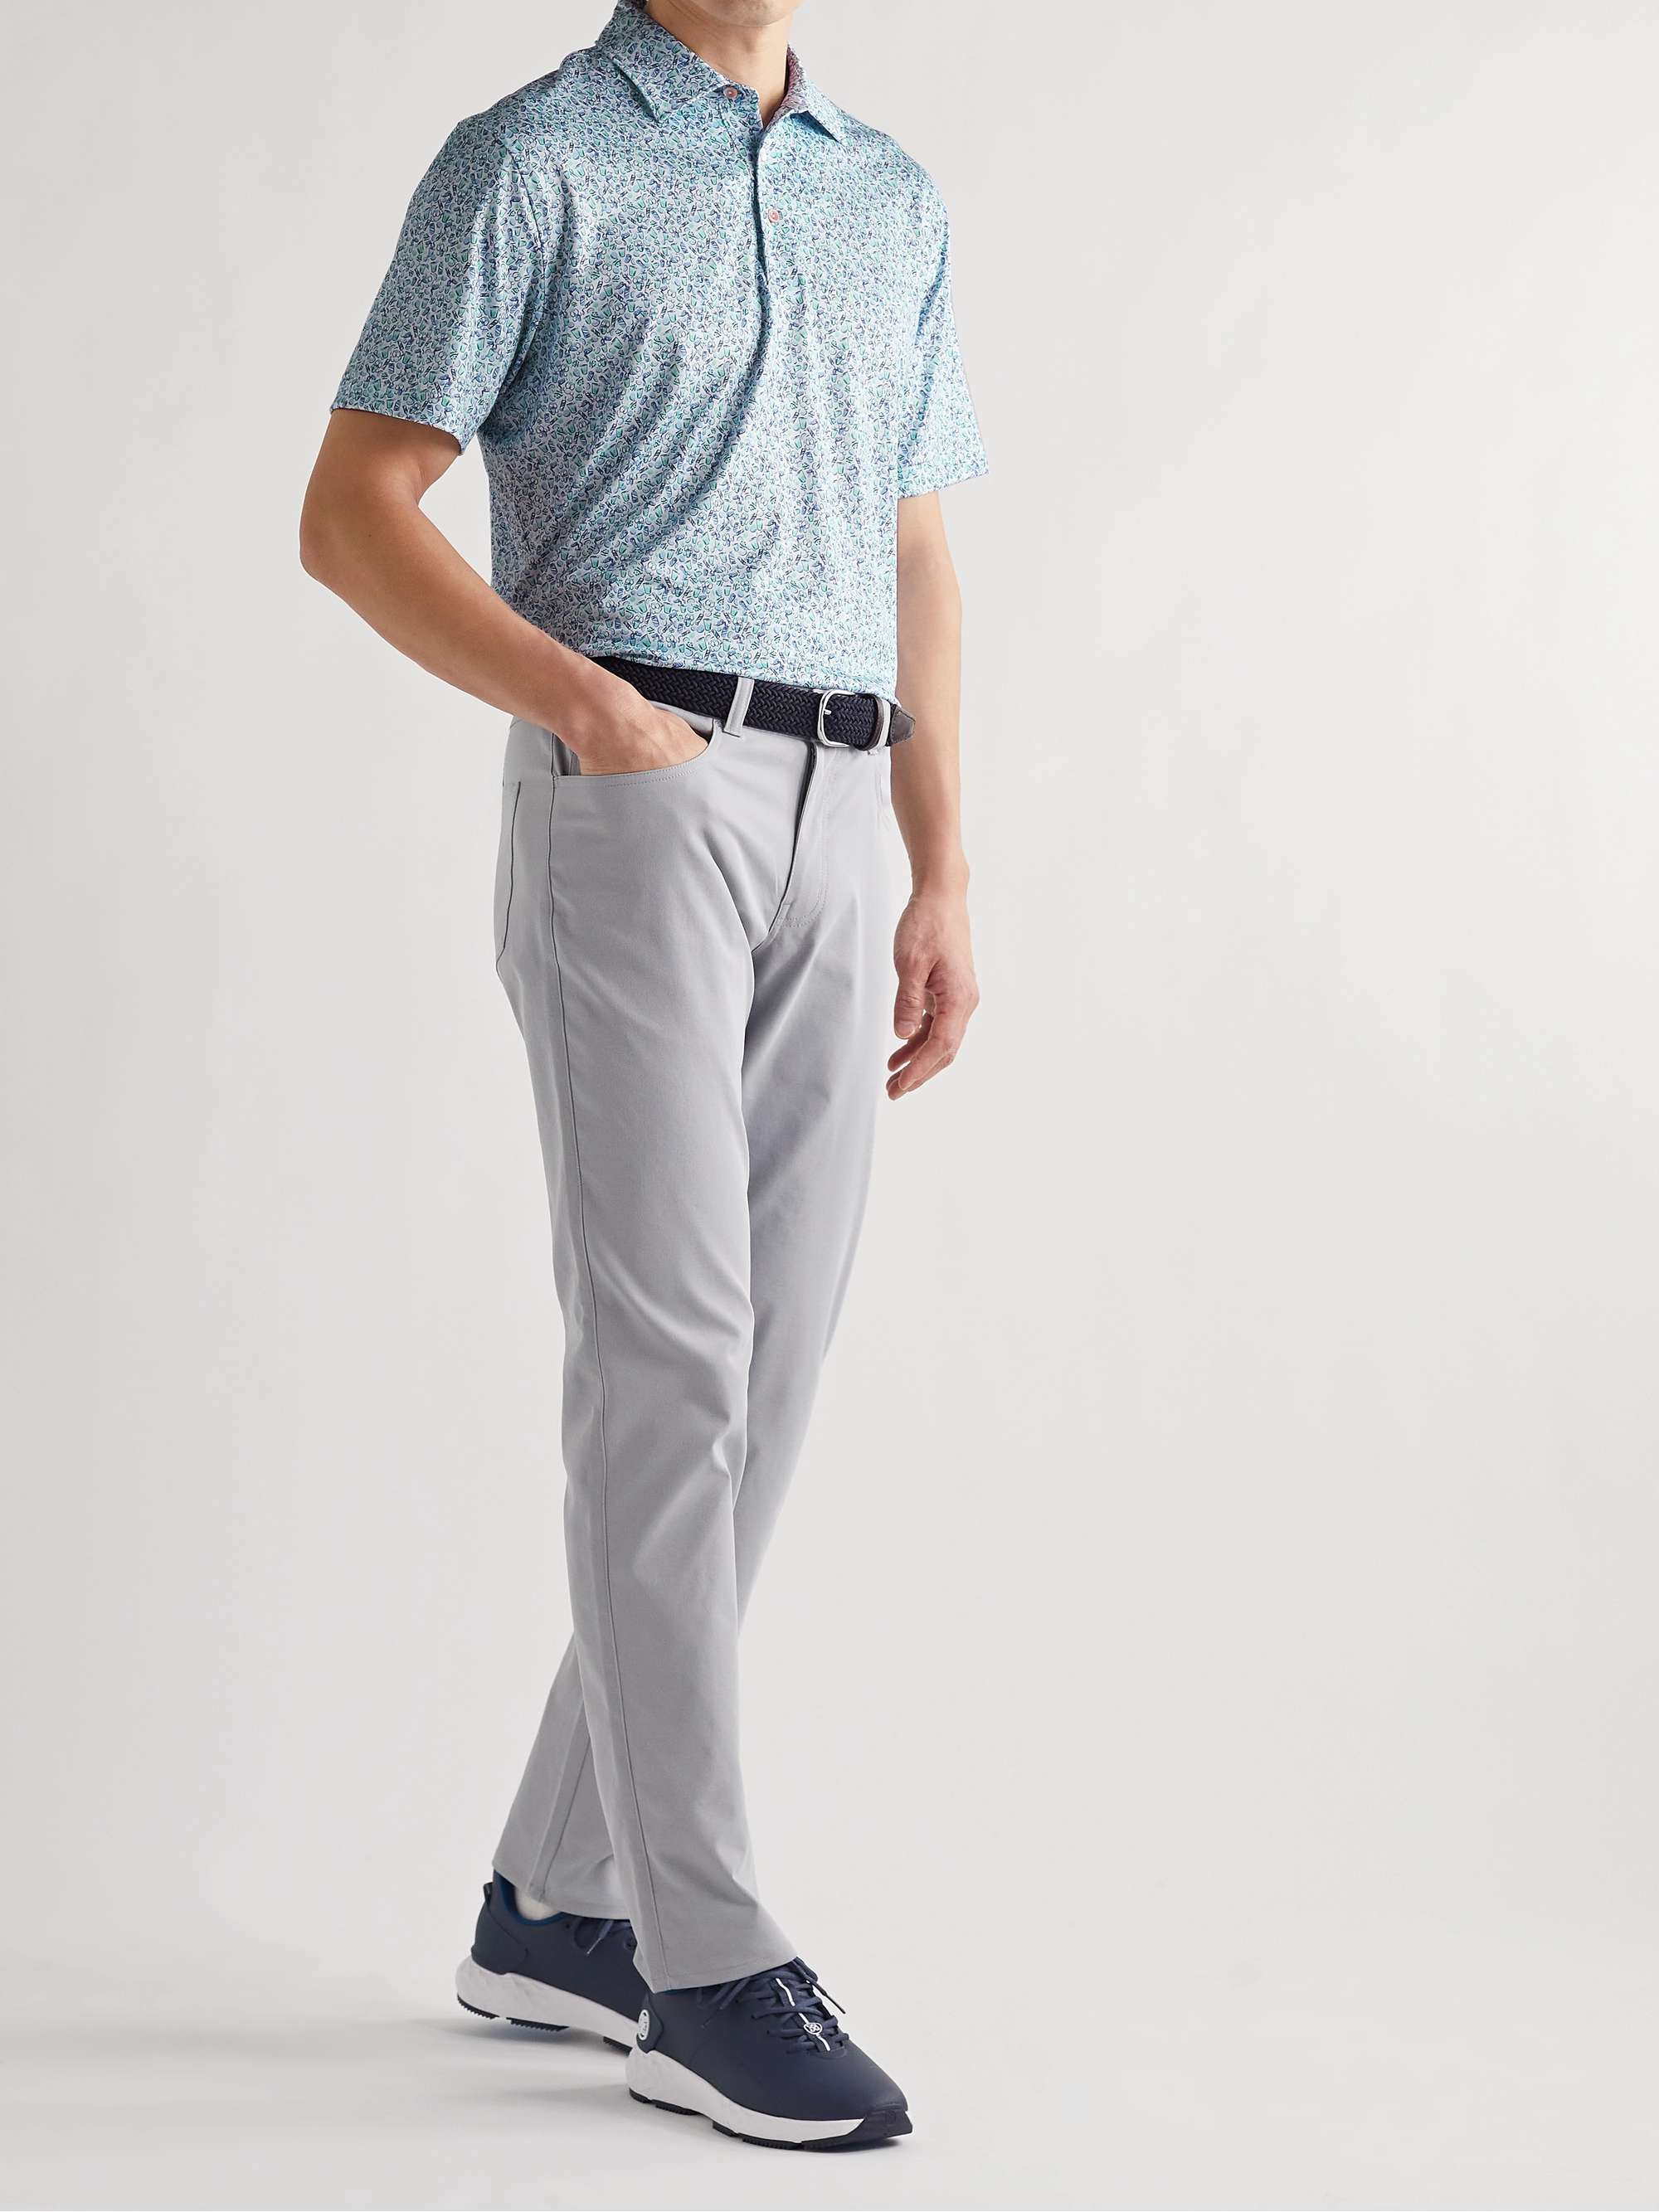 PETER MILLAR Dazed & Transfused Printed Tech-Jersey Golf Polo Shirt